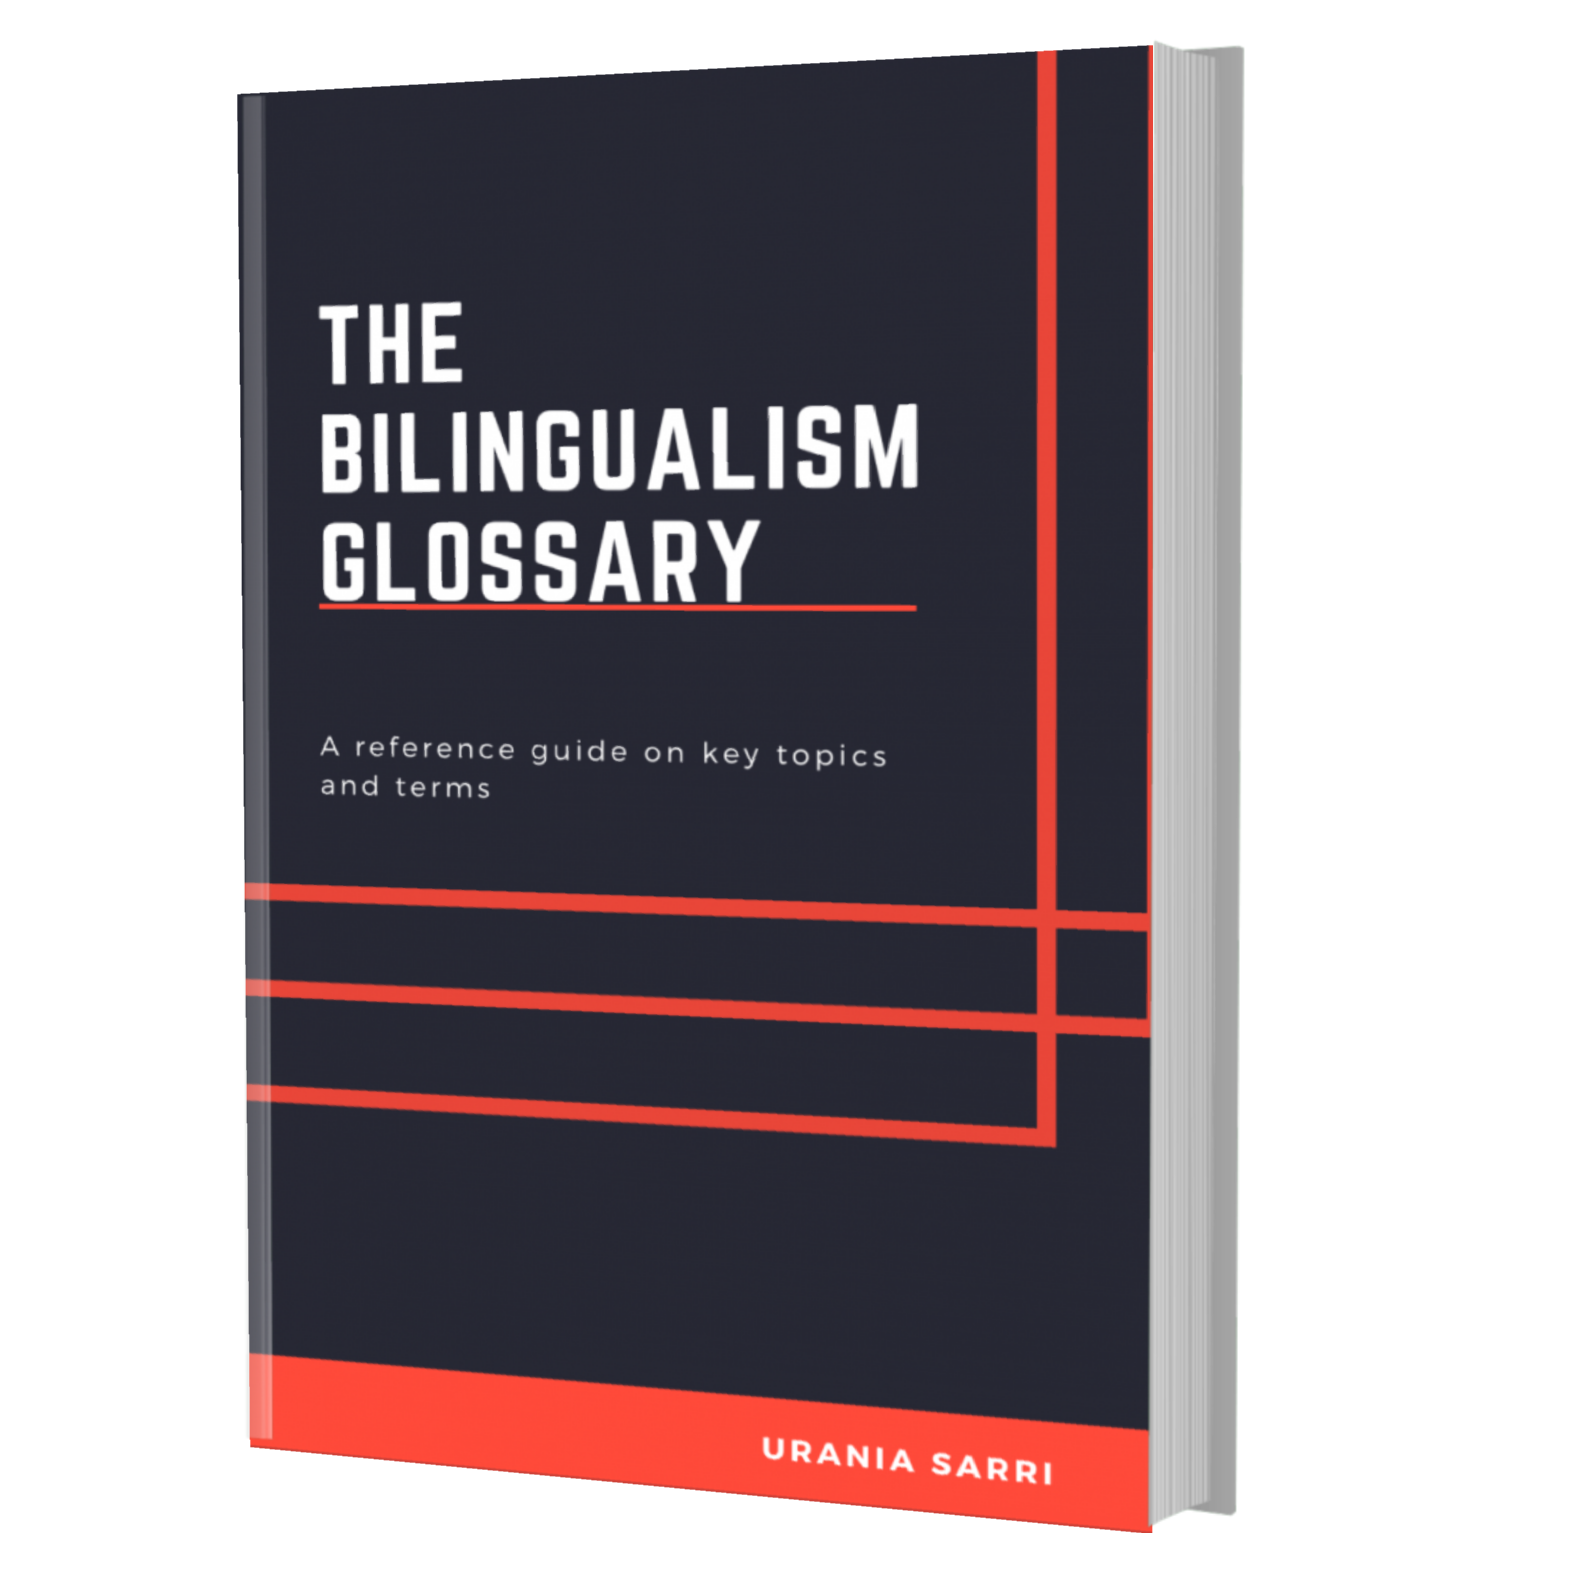 The Bilingualism Glossary by Urania Sarri